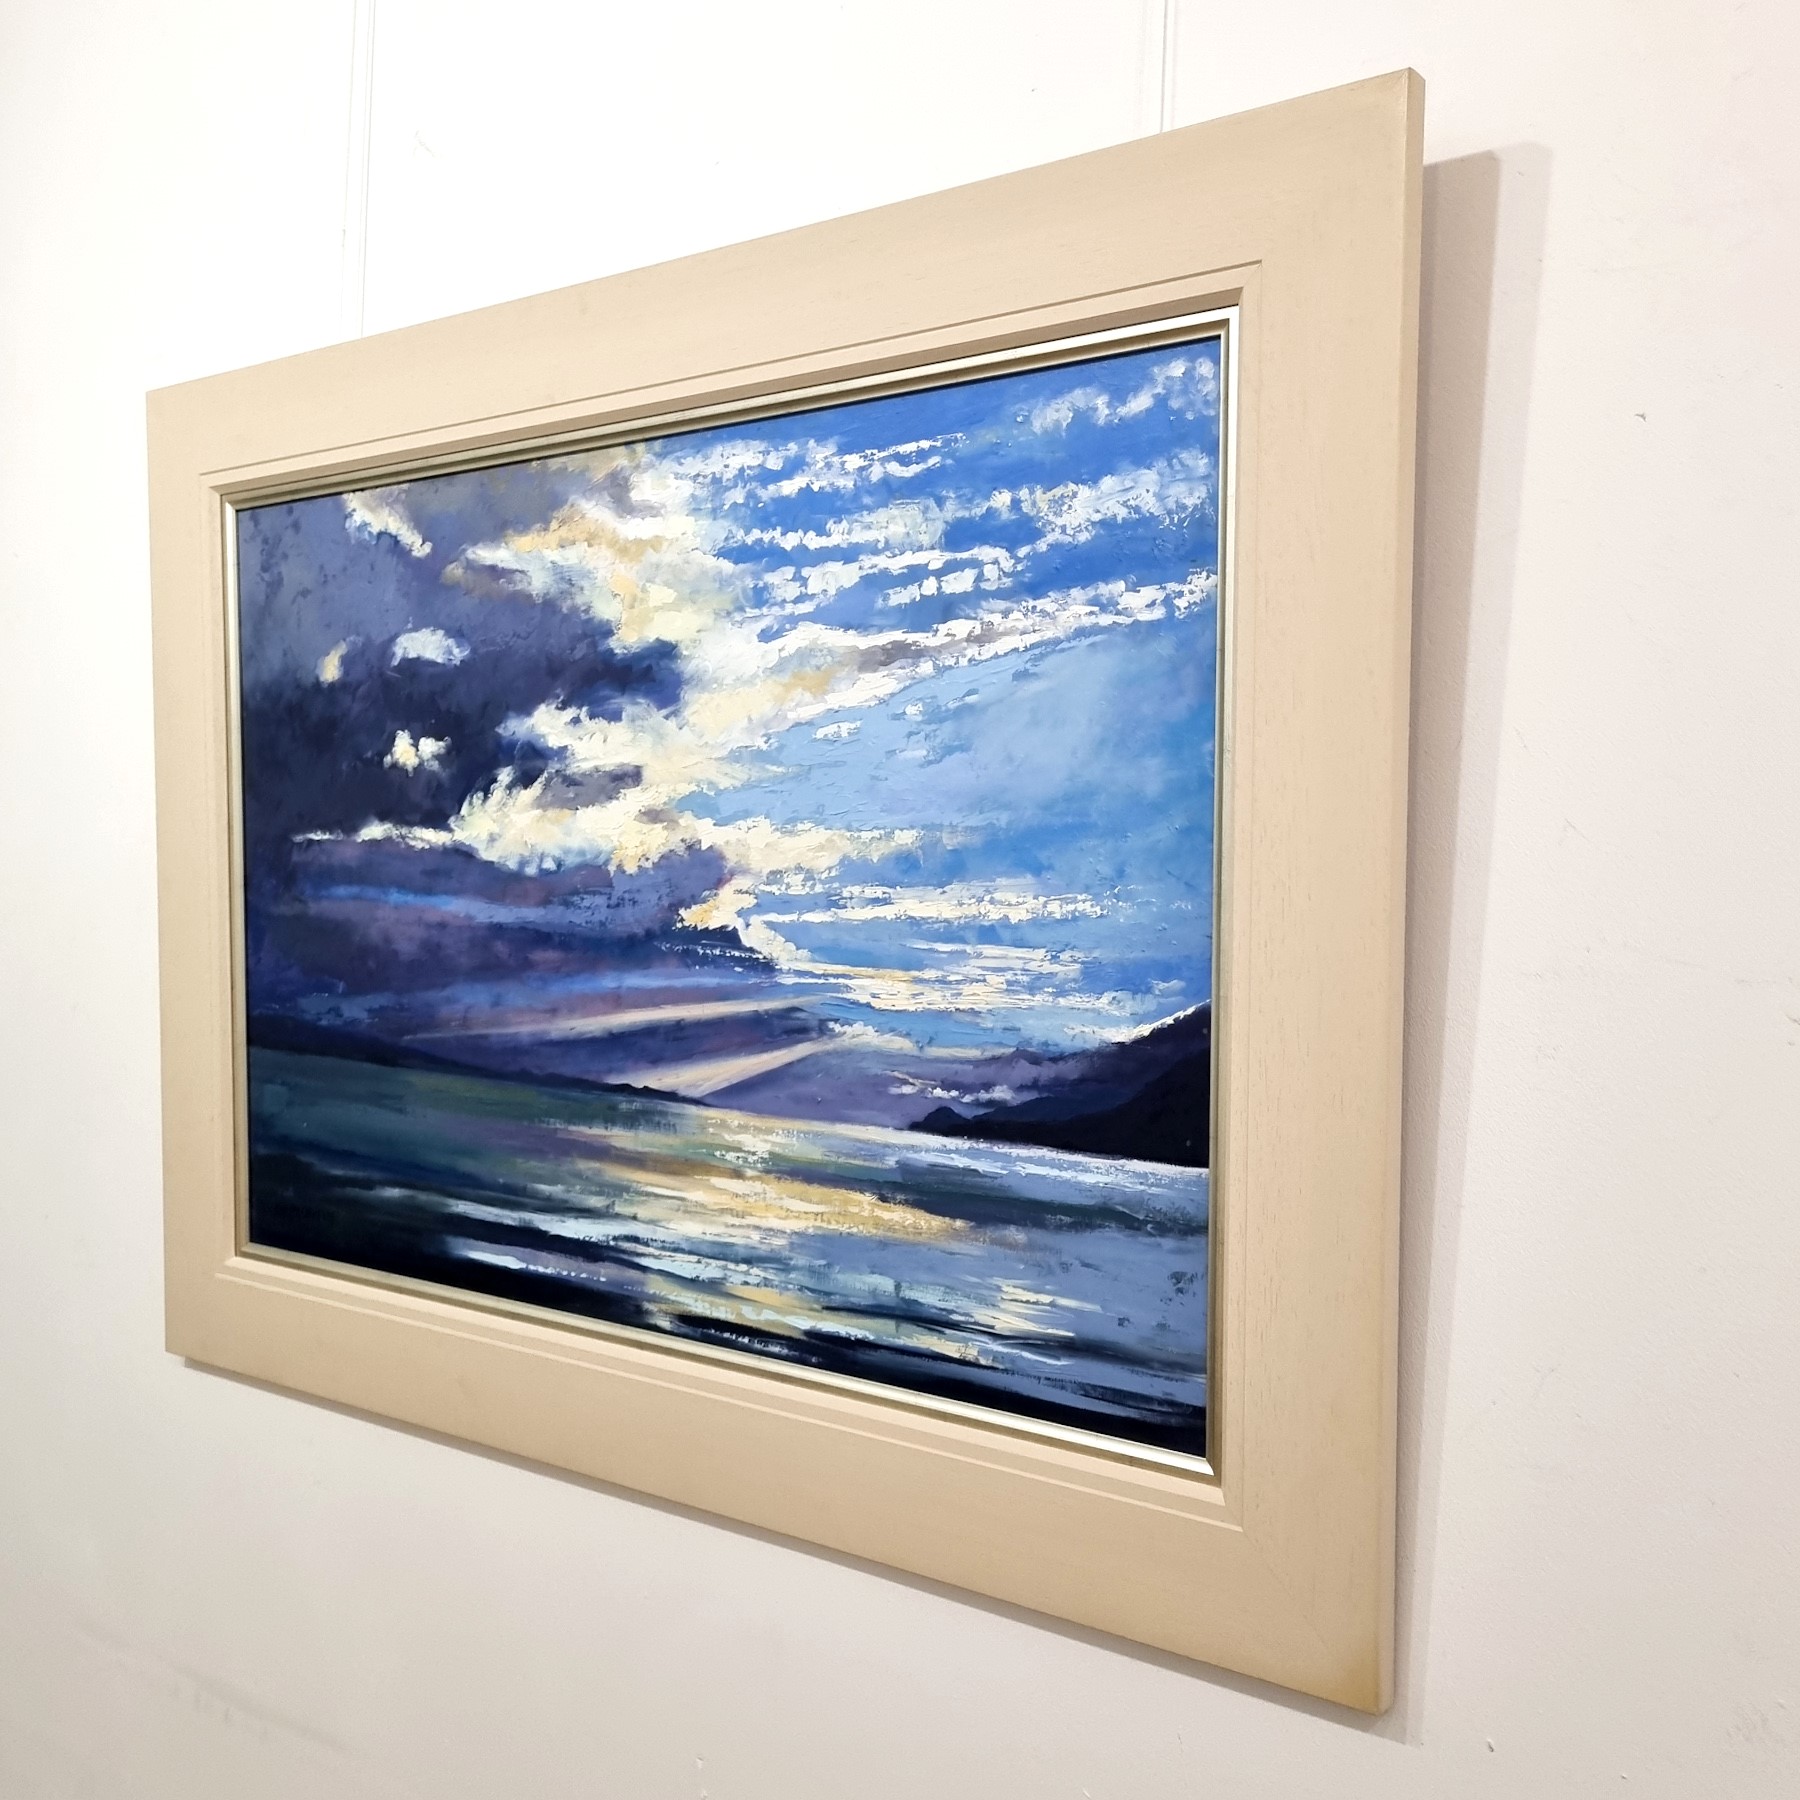 'Sun Rays on the Firth of Lorne' by artist Cara McKinnon Crawford